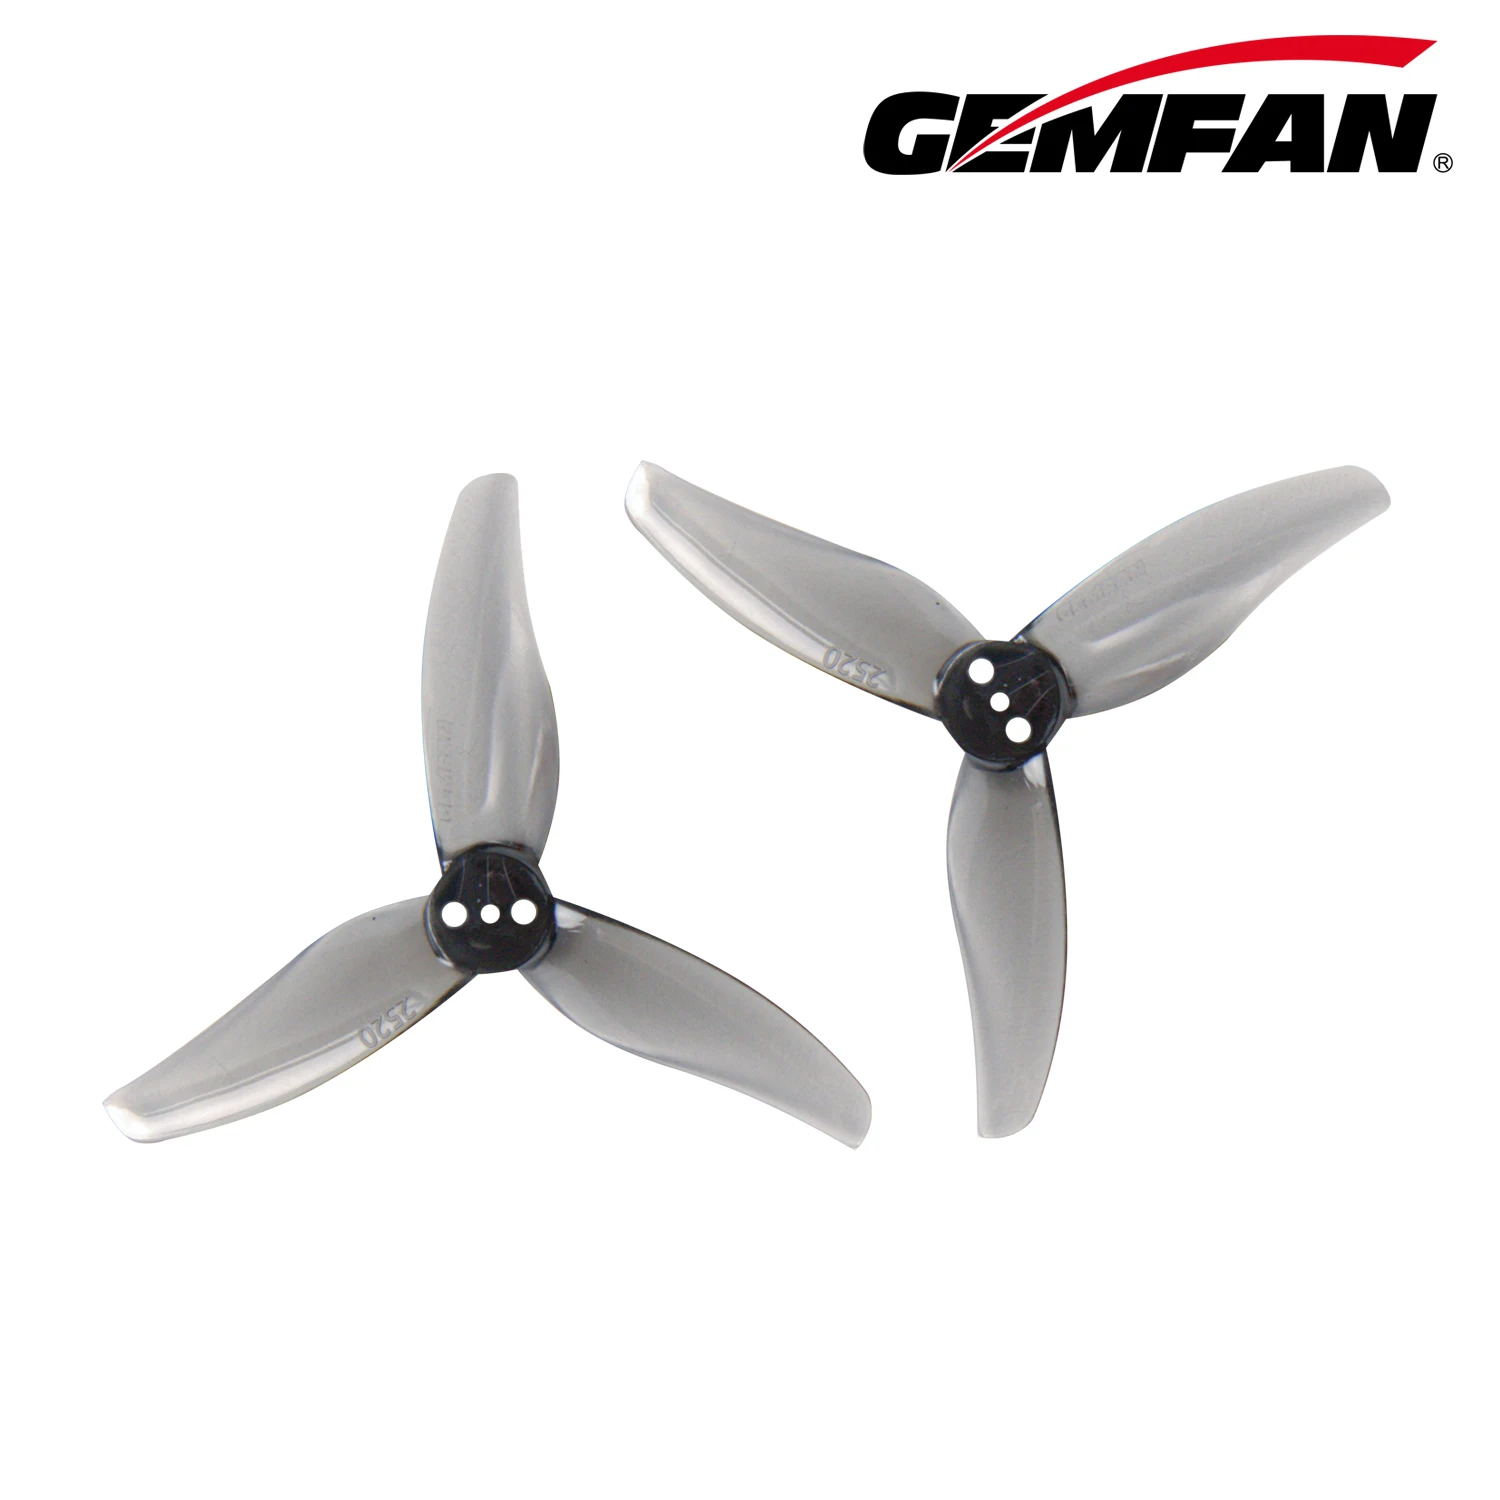 Gemfan Hurricane 2520 2.5x2 3-blade PC 1.5mm Gray propeller